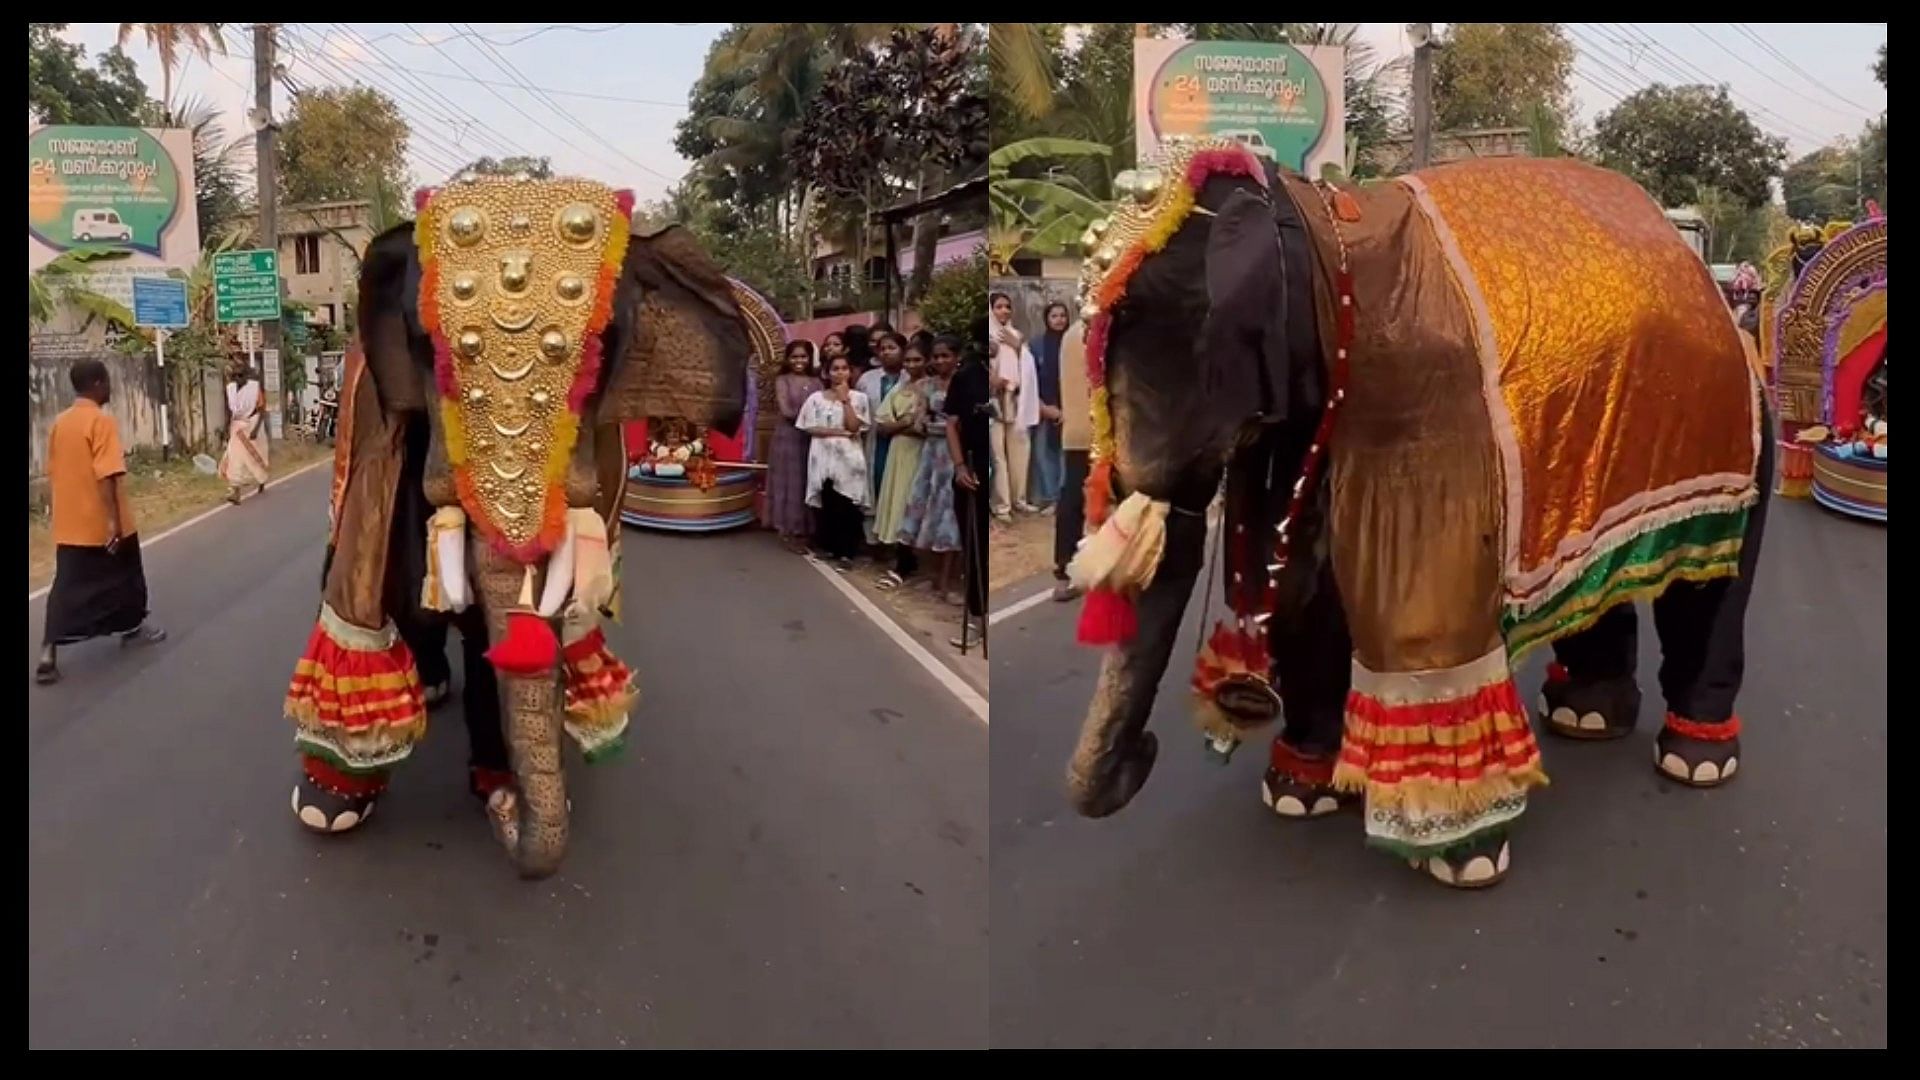 Elephant dancing on superstar rajnikant song video goes viral on social media